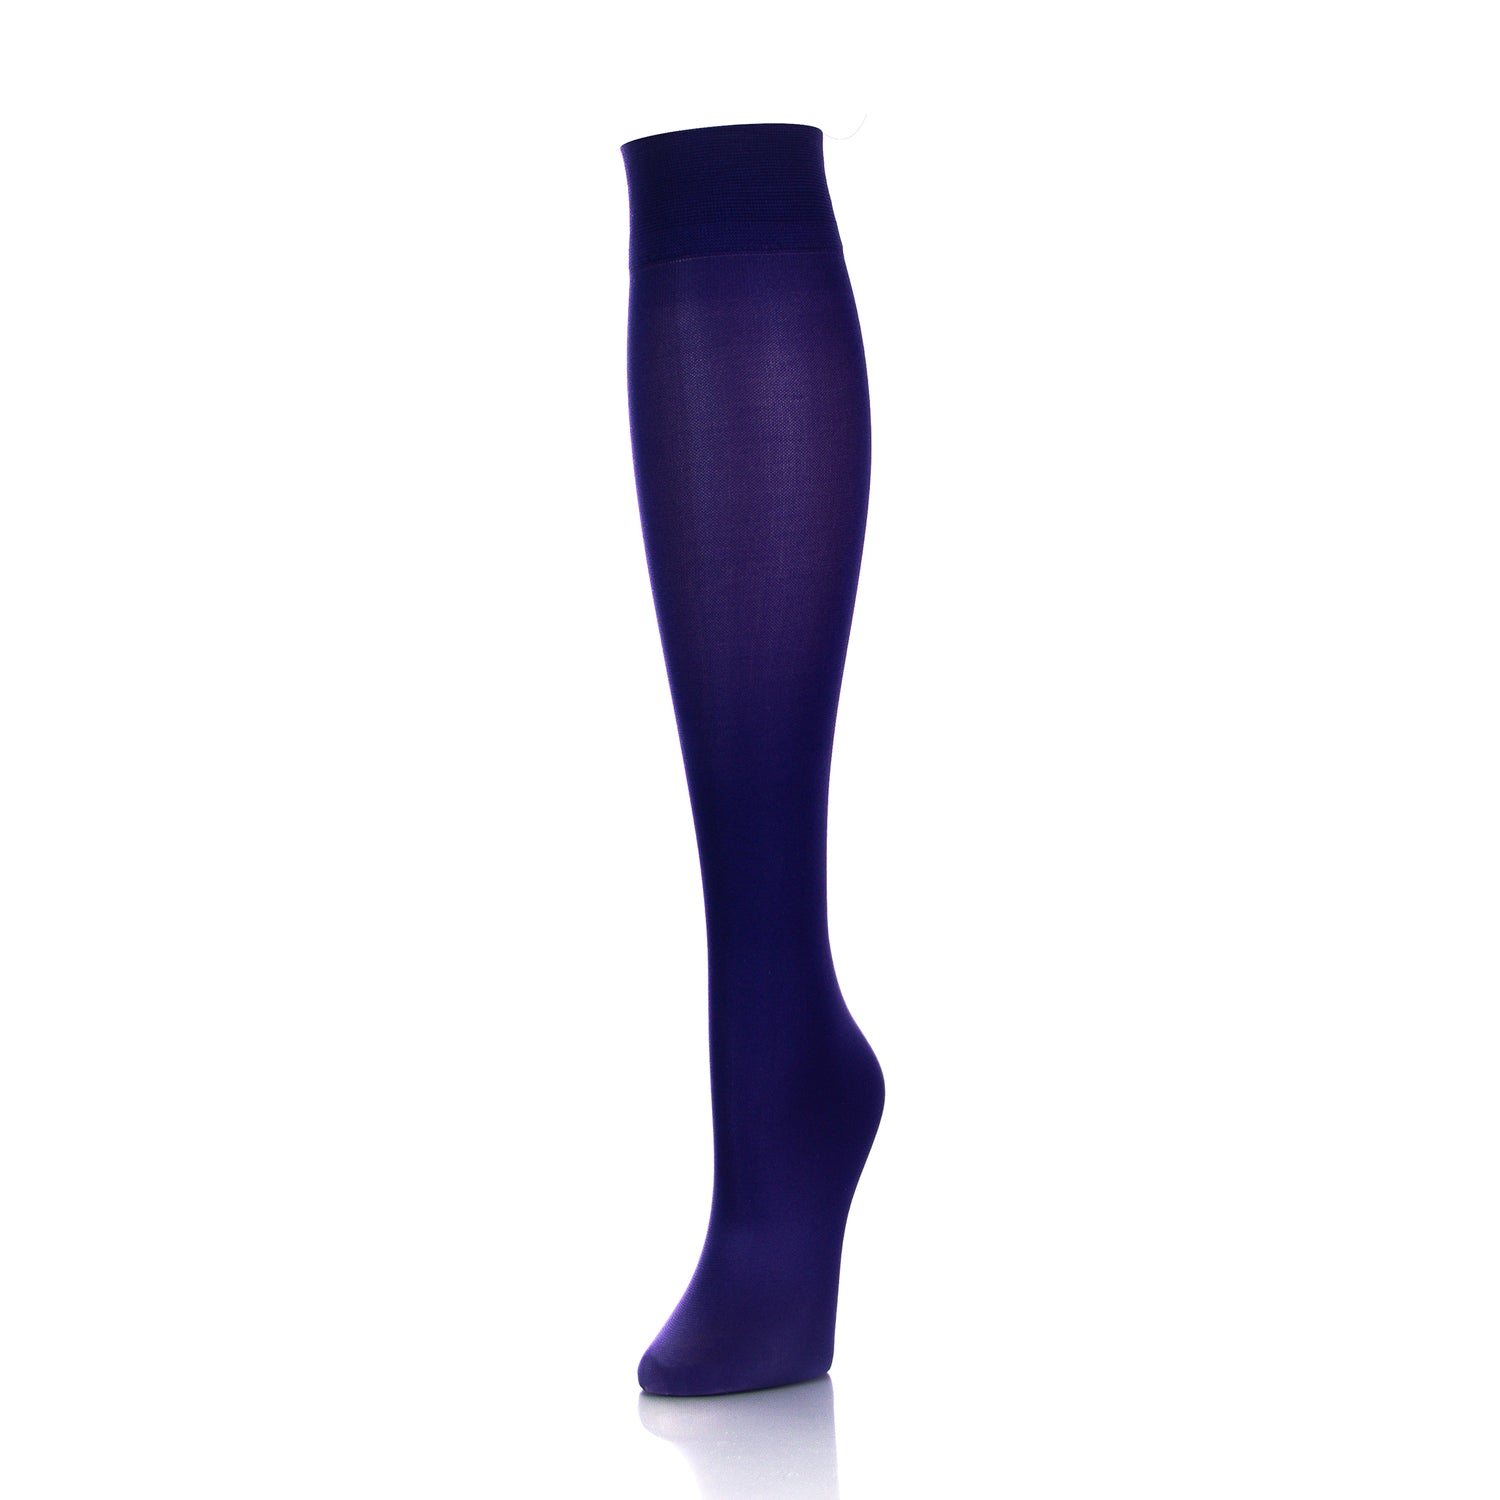 Footless Support Pantyhose for Women 20-30mmHg Varicose Veins - Grey,  Medium 